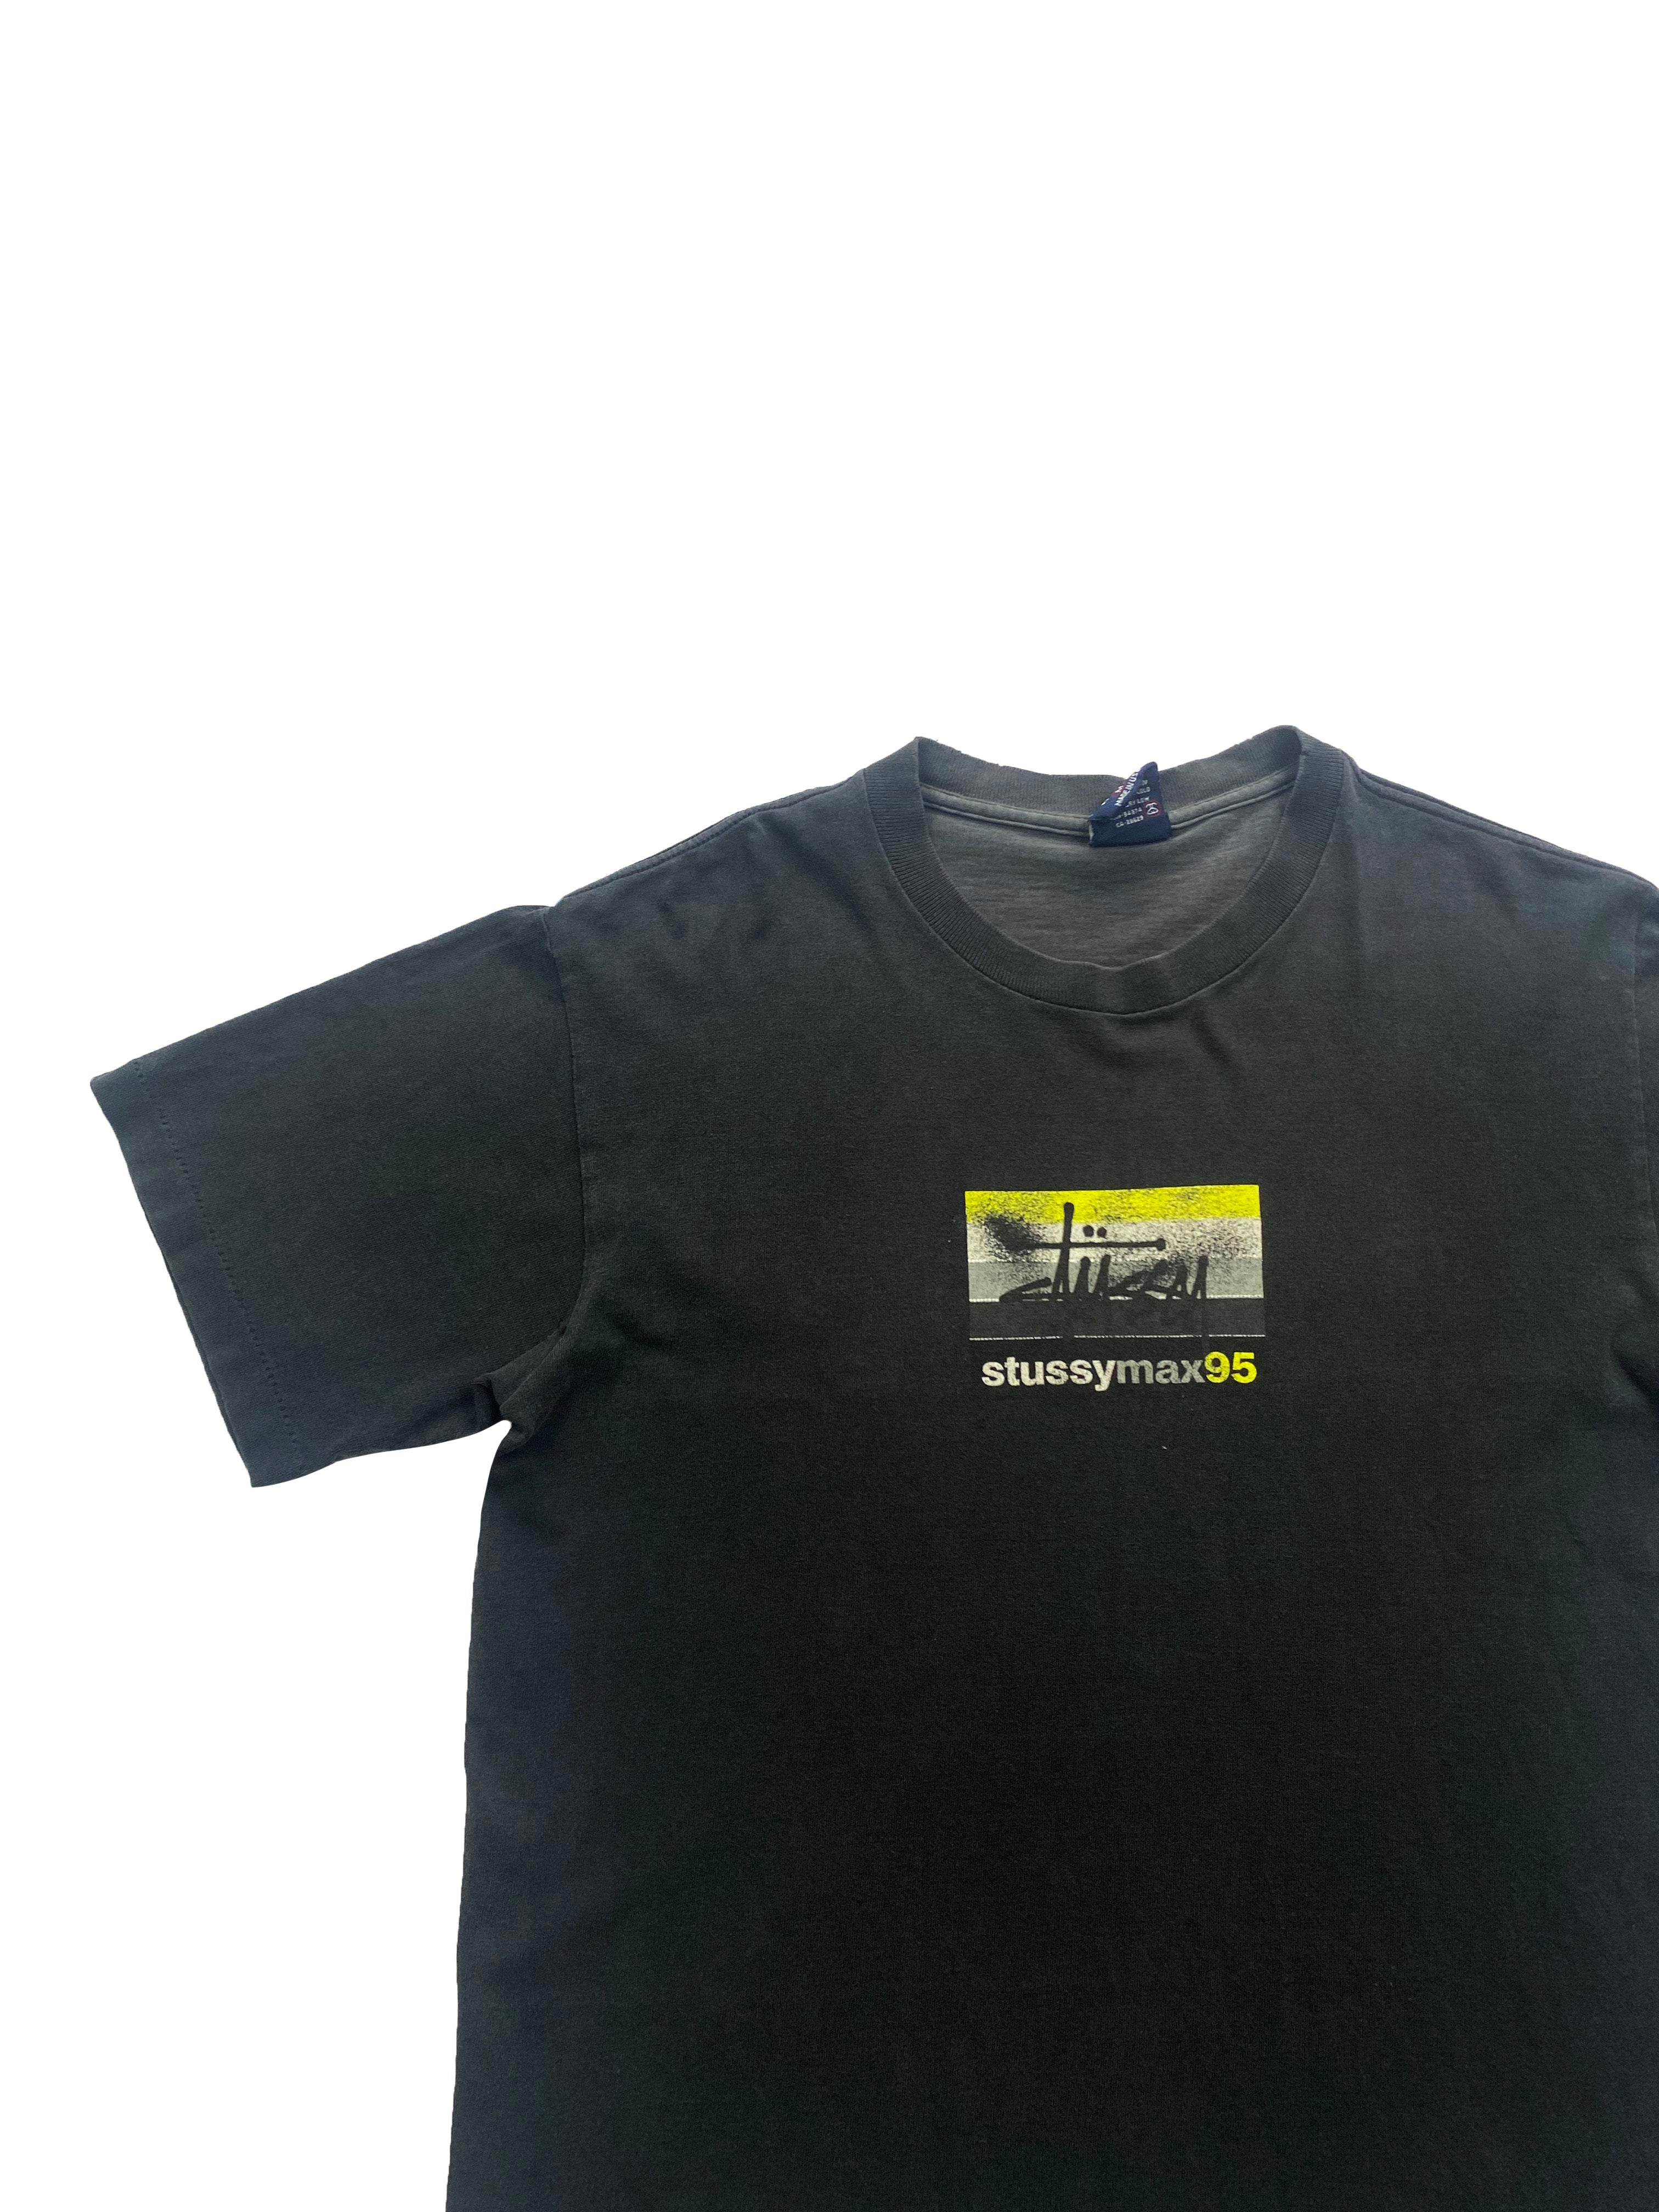 Stussy Black Air Max 95 T-shirt 90's